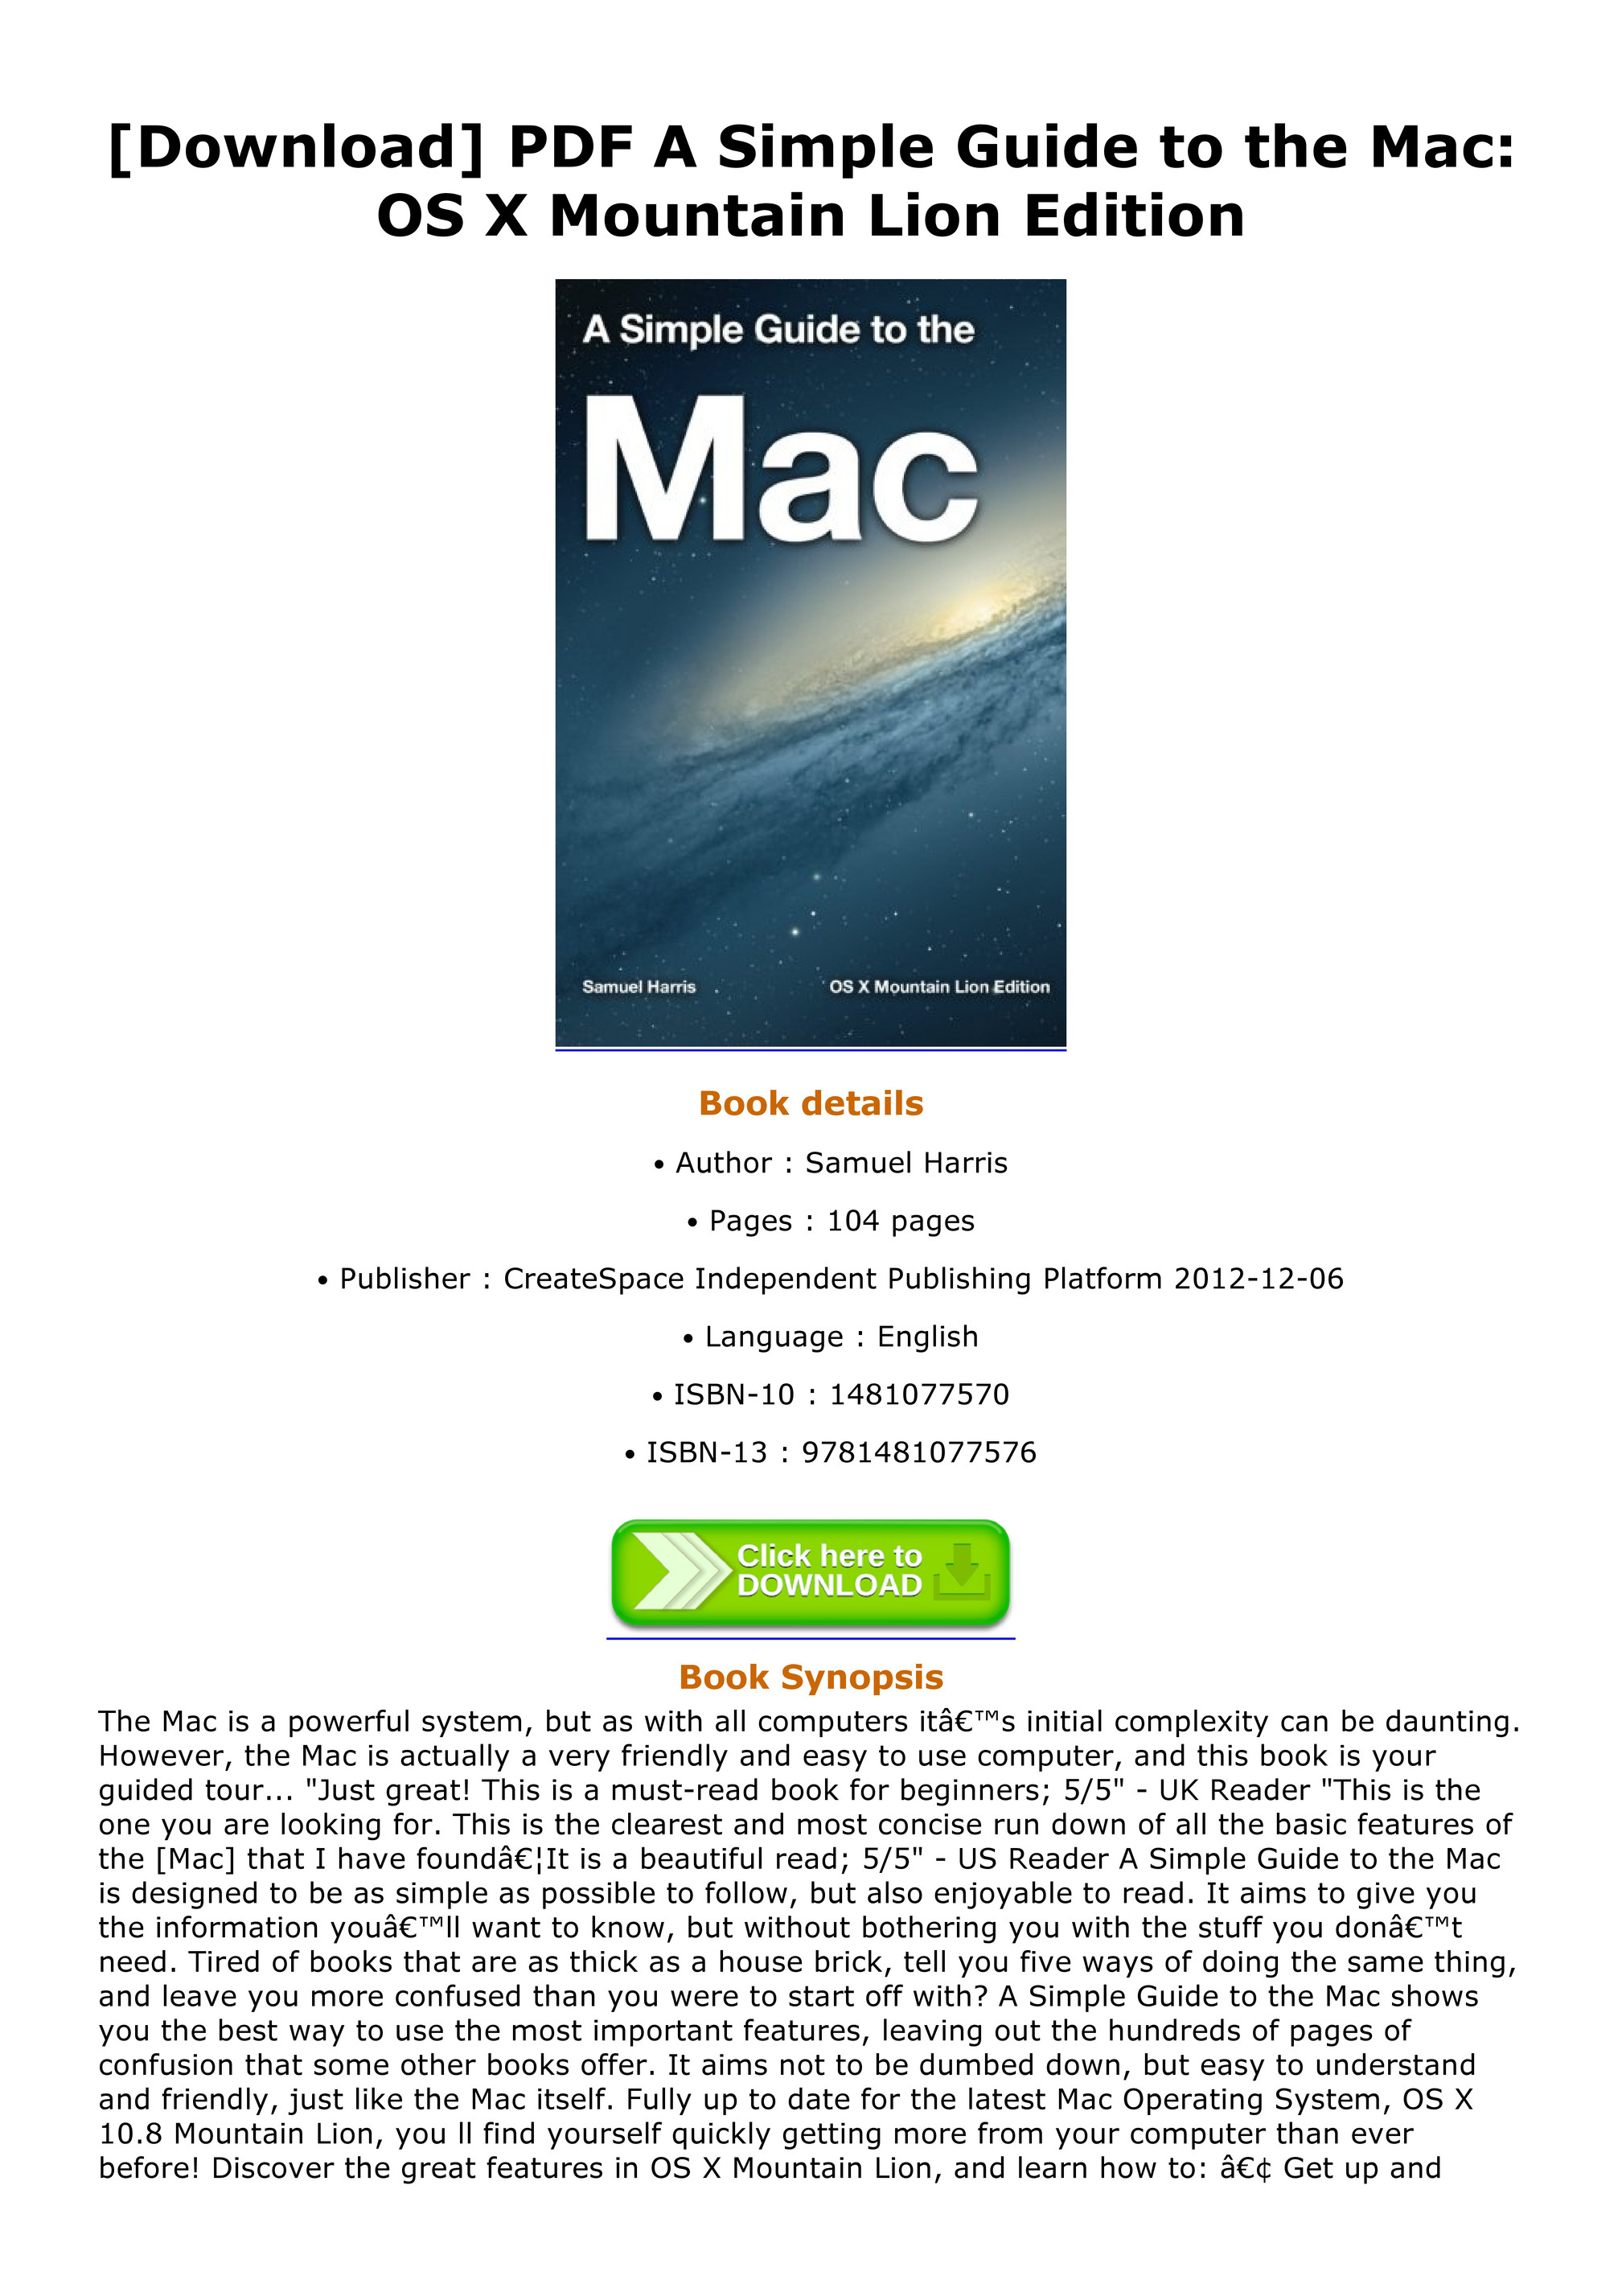 pdf download for mac osx